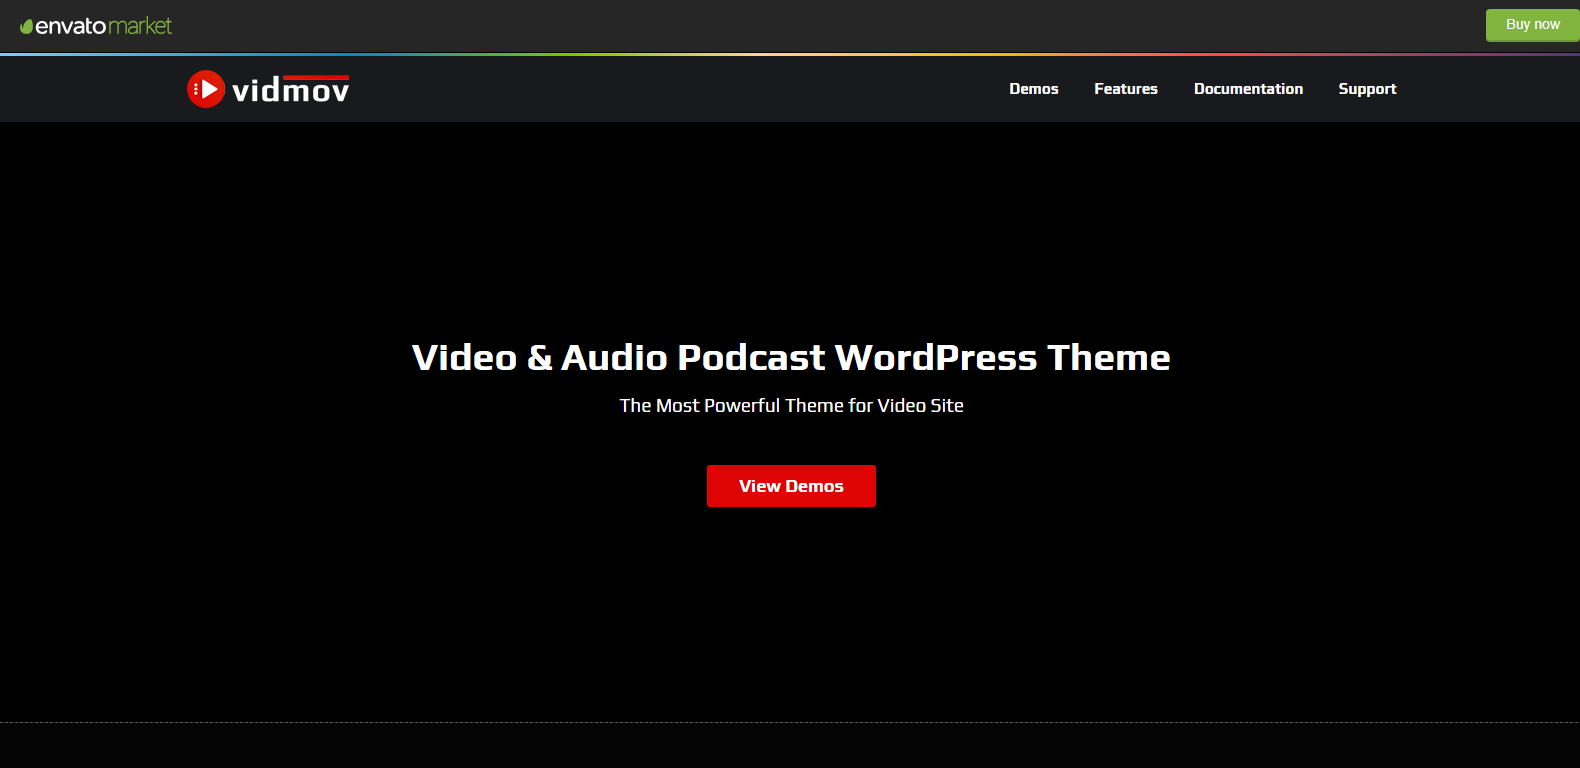 VidMov v1.8.6 - Video WordPress Theme